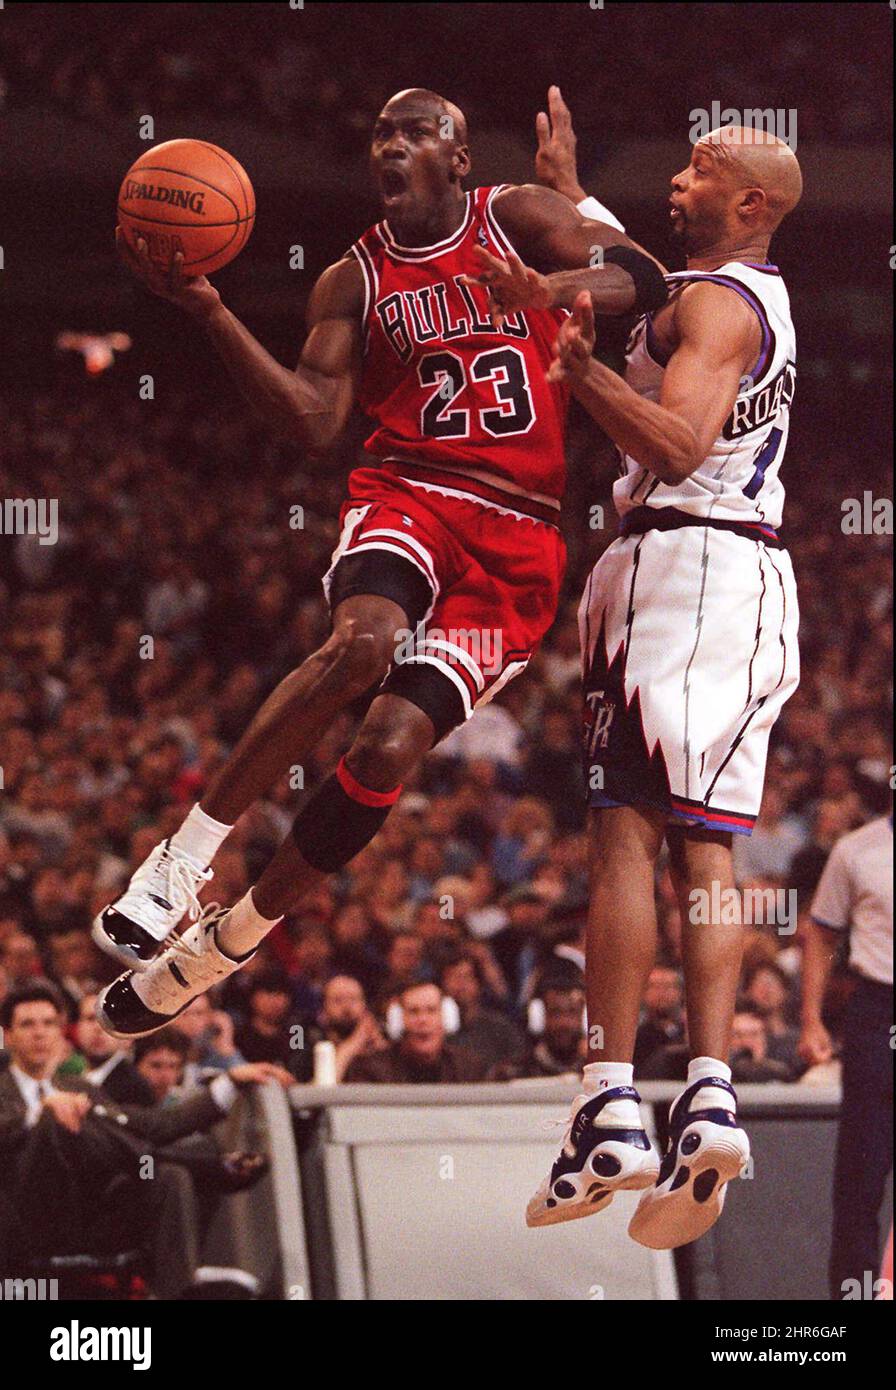 1994: Michael Jordan Runs His Mouth About Former Bulls Teammates at a Bar :  r/VintageNBA